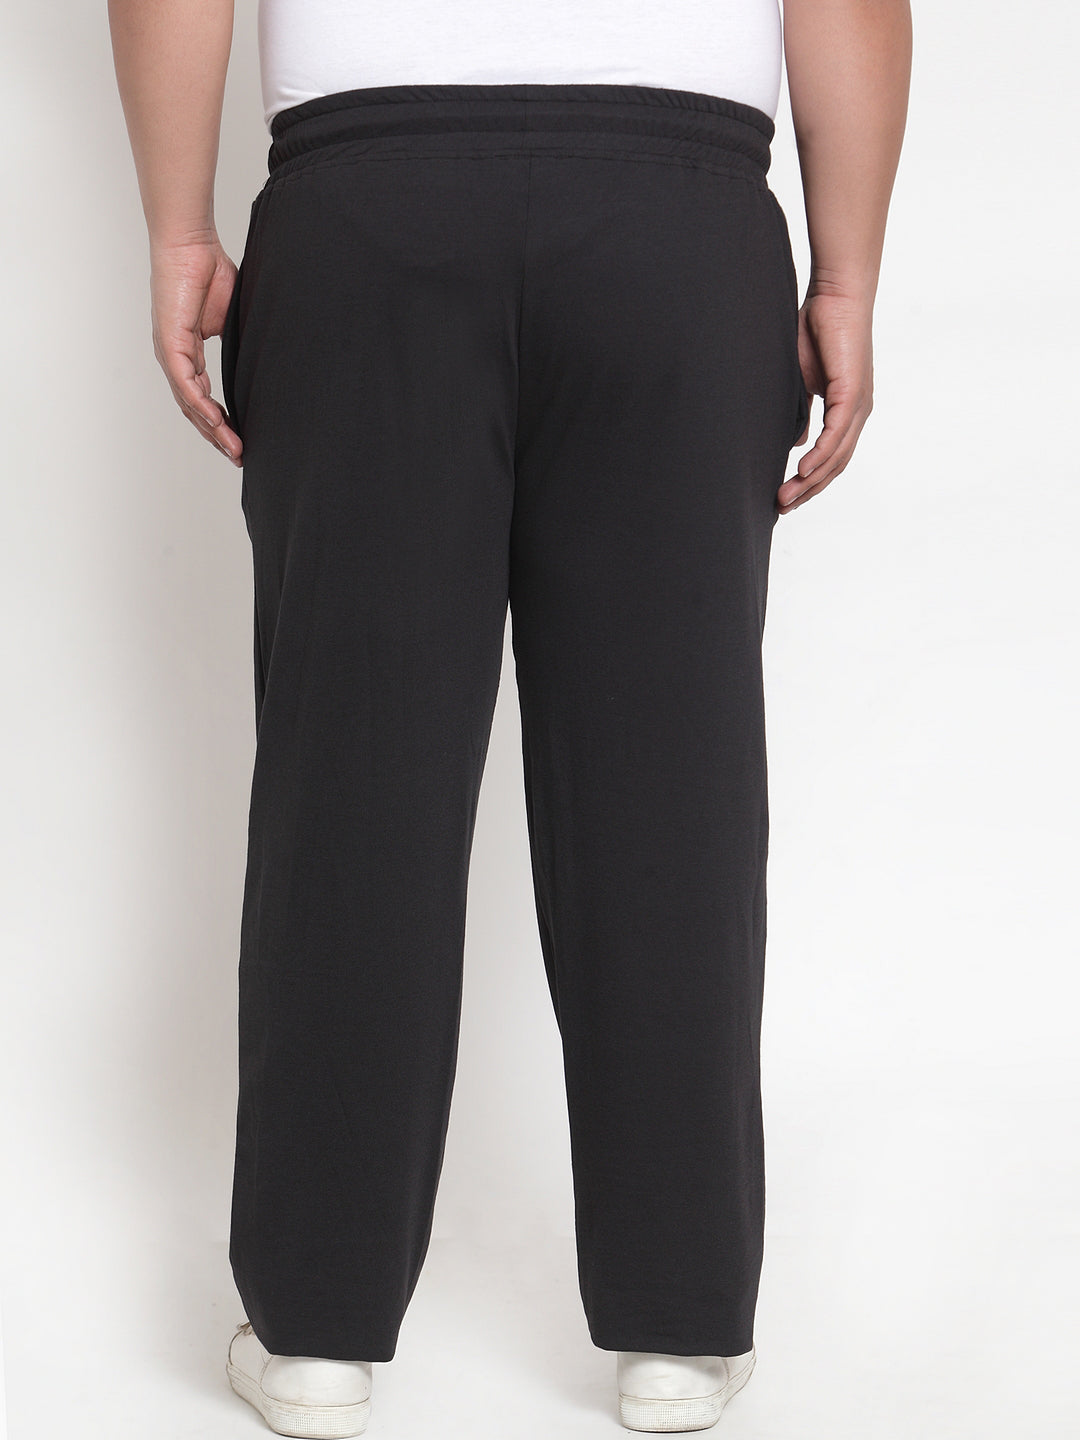 Aayomet Hiking Pants For Men Men's Sweatpants Casual Lounge Cotton Pajama  Yoga Pants Open Bottom Straight Leg Male Sweat Pants with Pockets,Black L -  Walmart.com